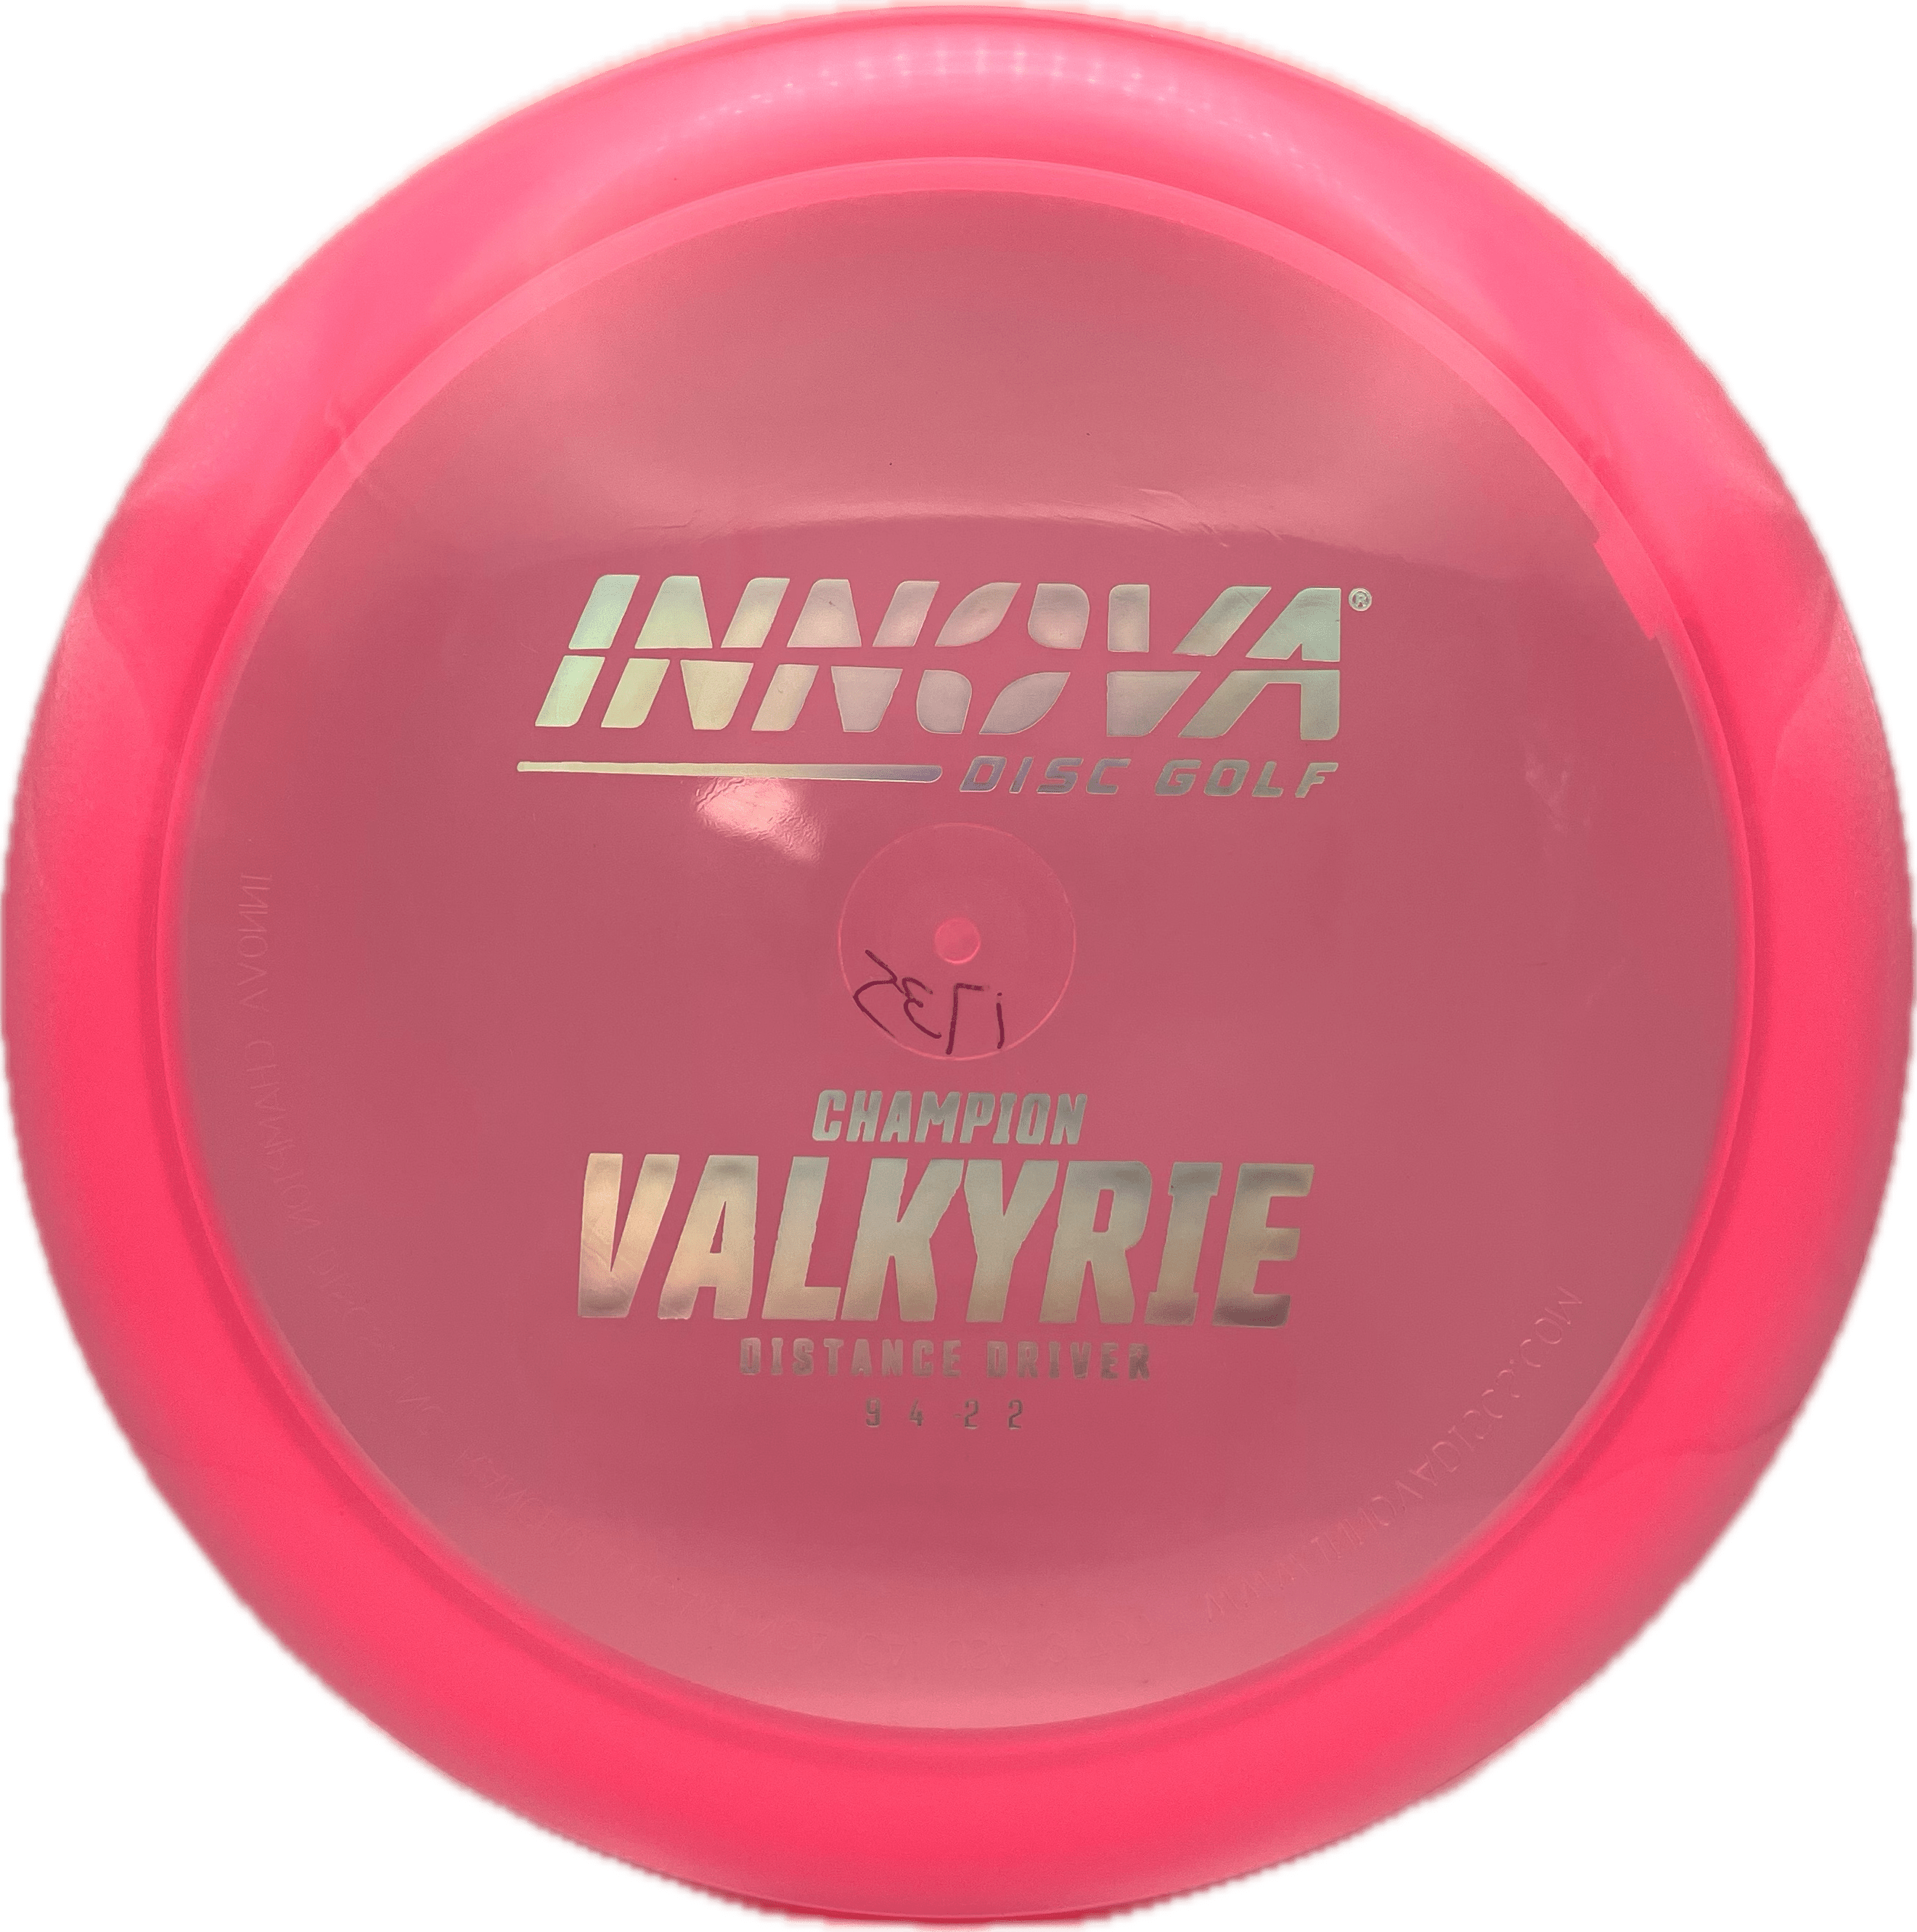 Innova Disc Innova Valkyrie, Champion, 173-175, Pink, Silver Metallic